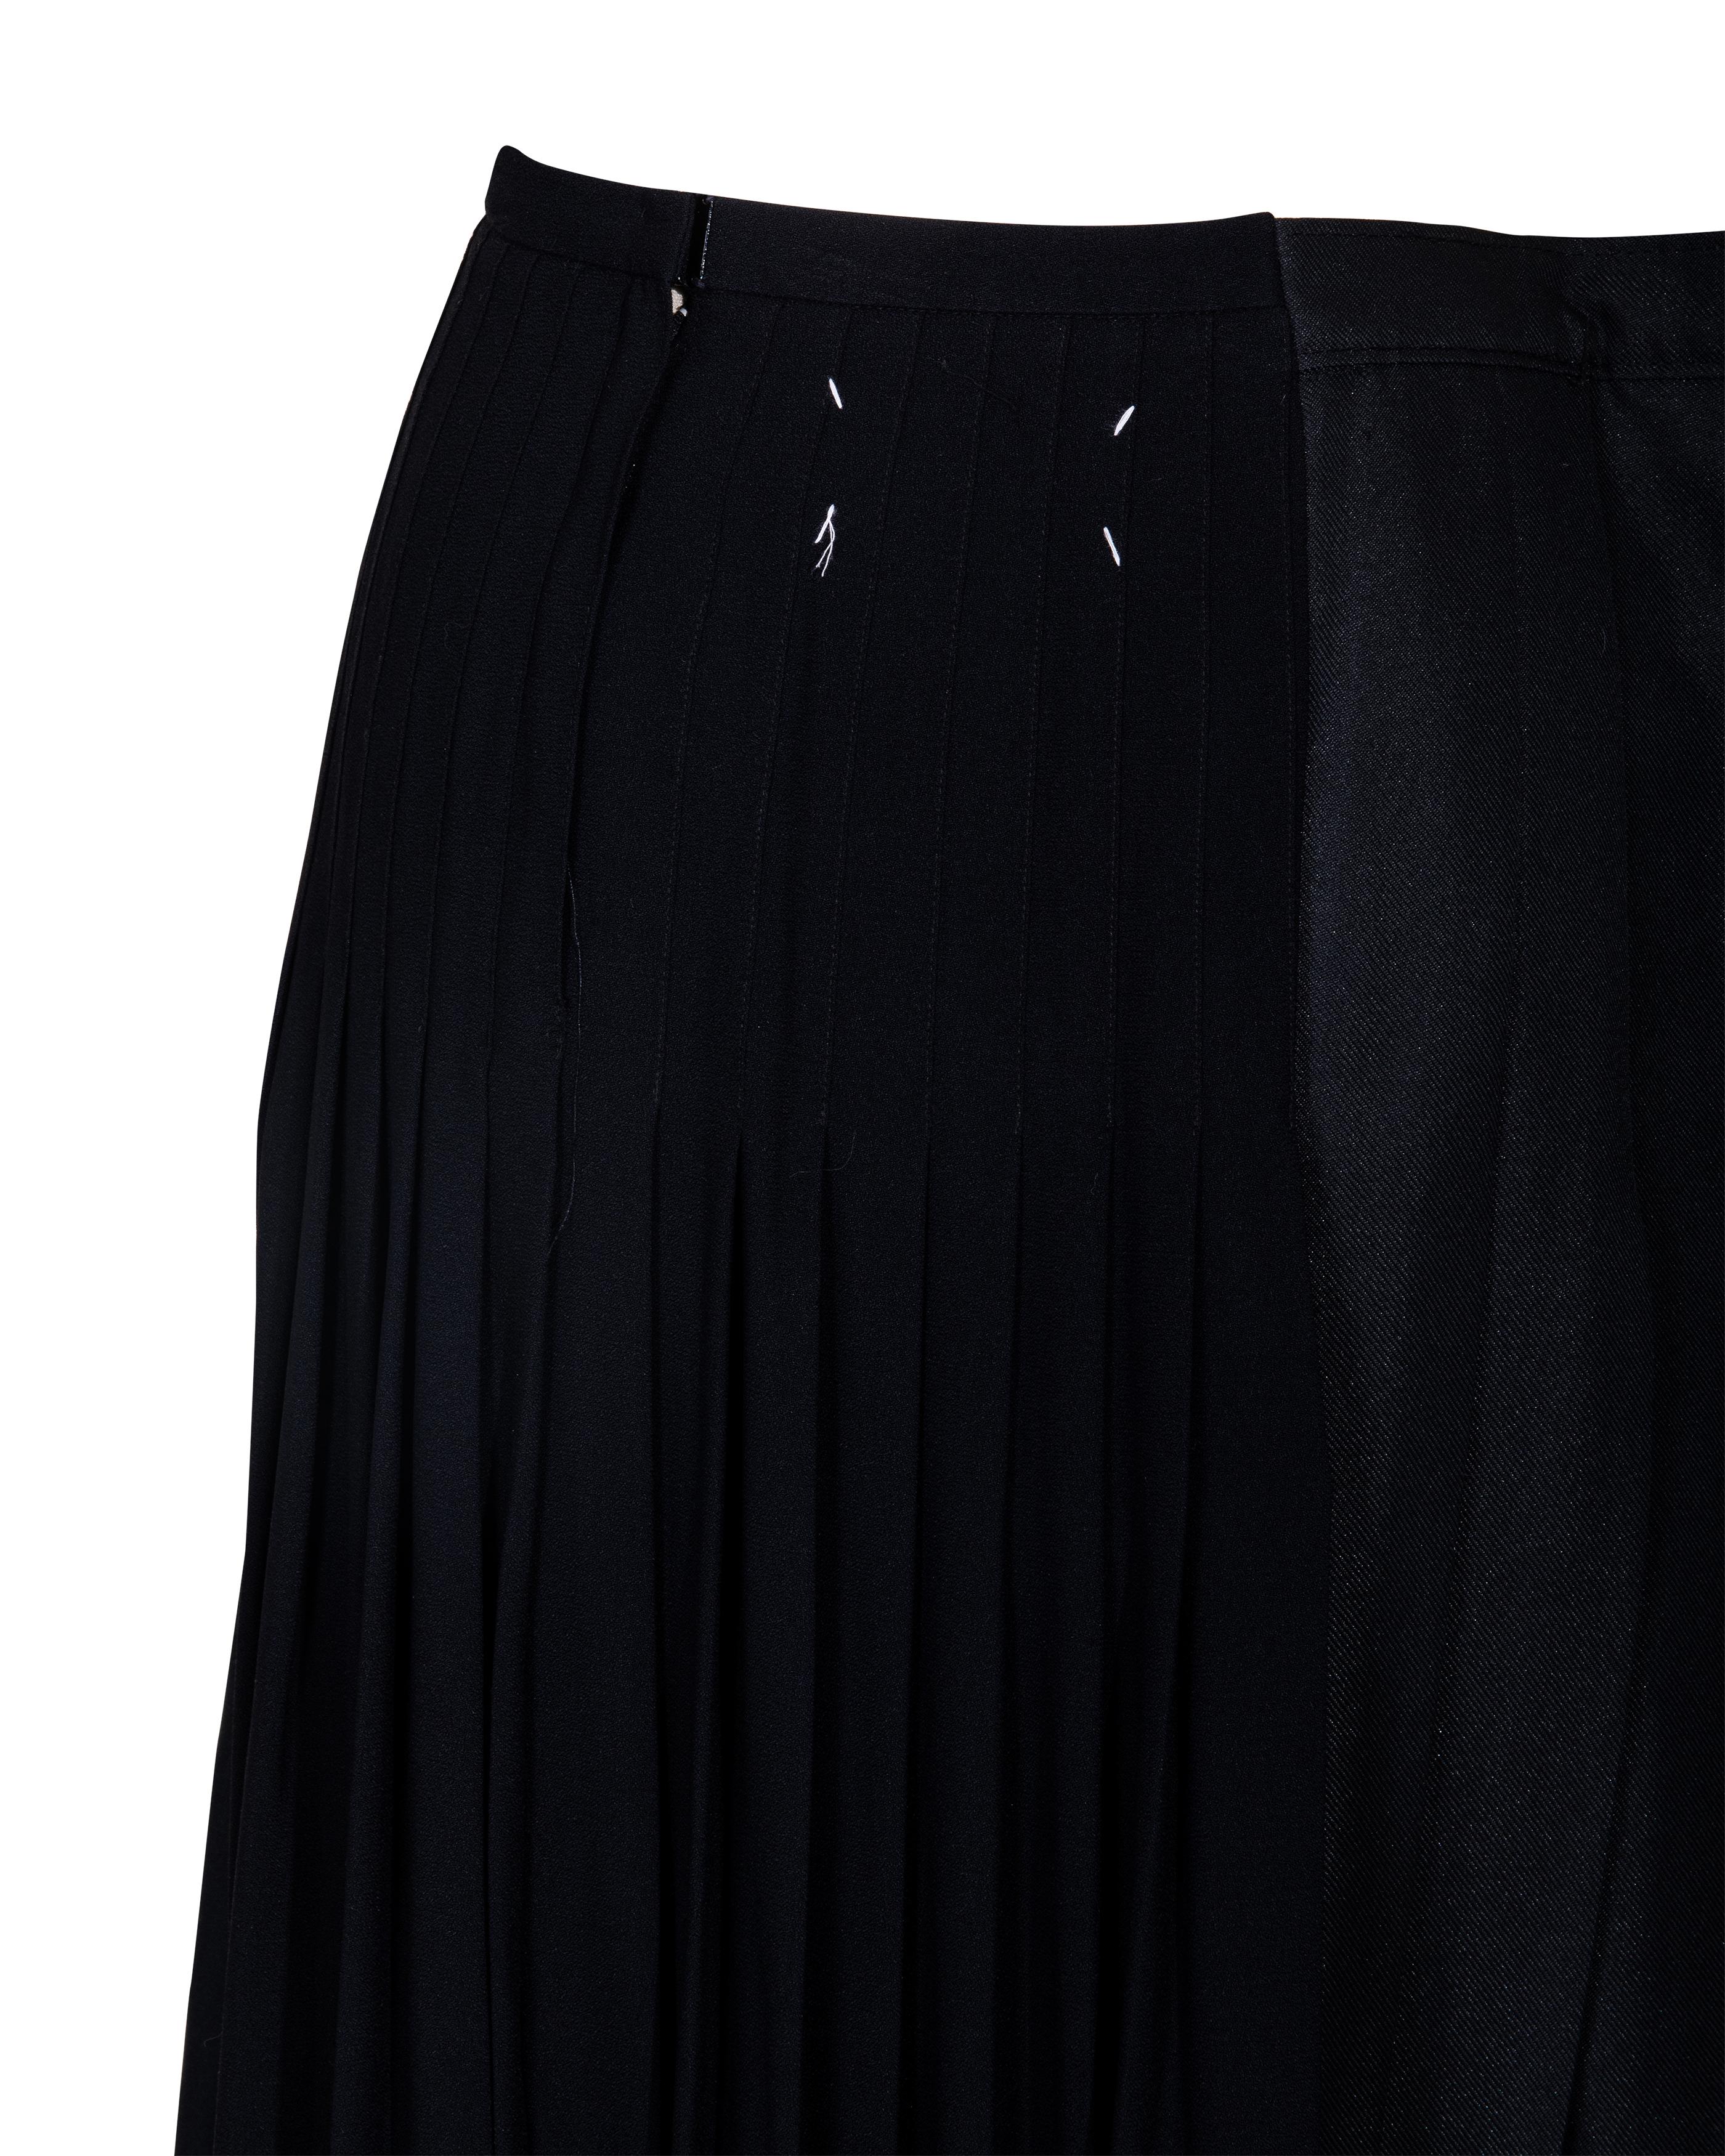 S/S 2001 Maison Martin Margiela One-of-One Black Pleated Artisanal Maxi Skirt For Sale 3